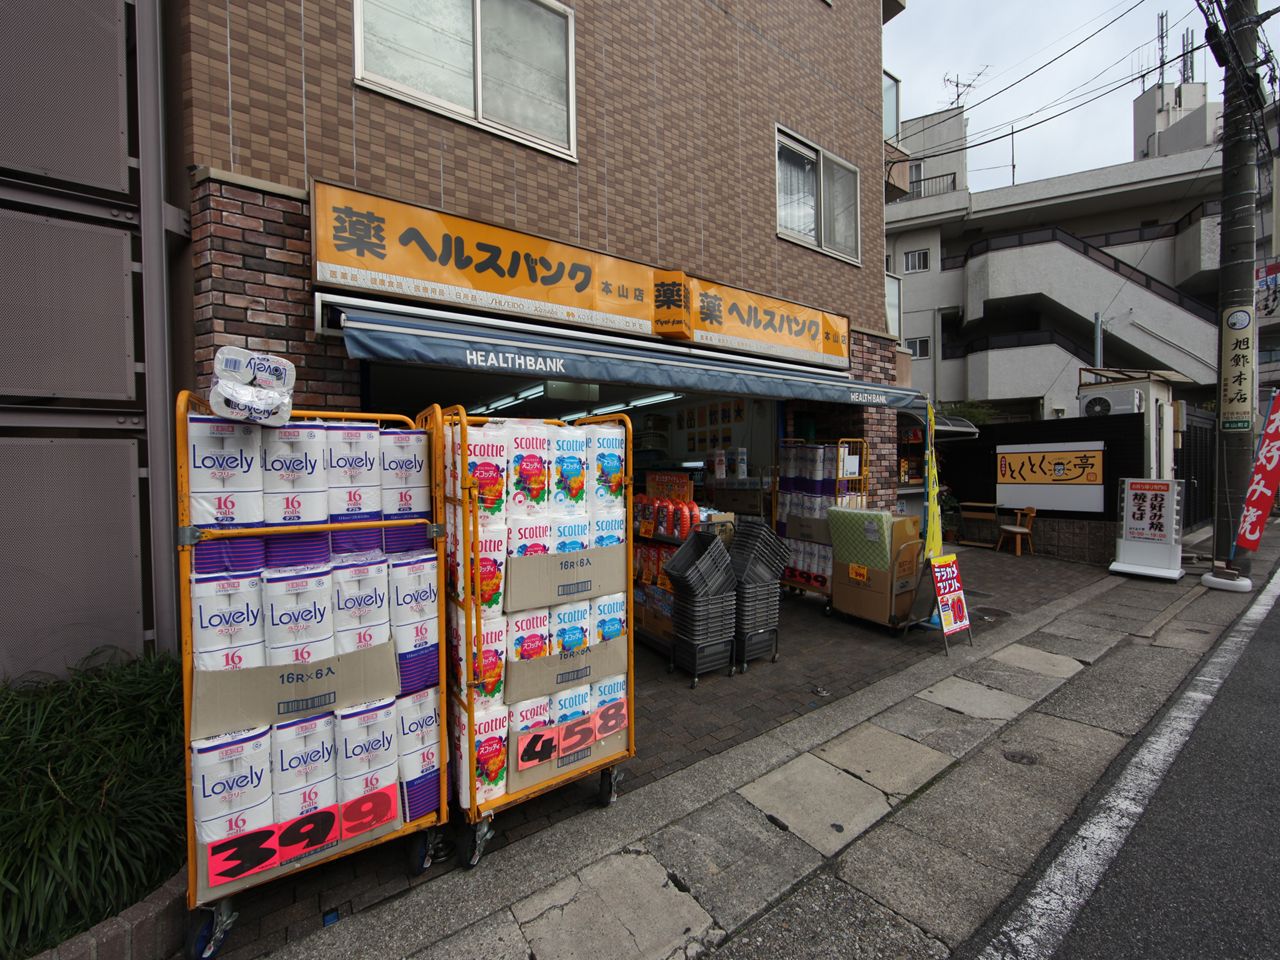 Dorakkusutoa. Health bank Motoyama shop 890m until (drugstore)